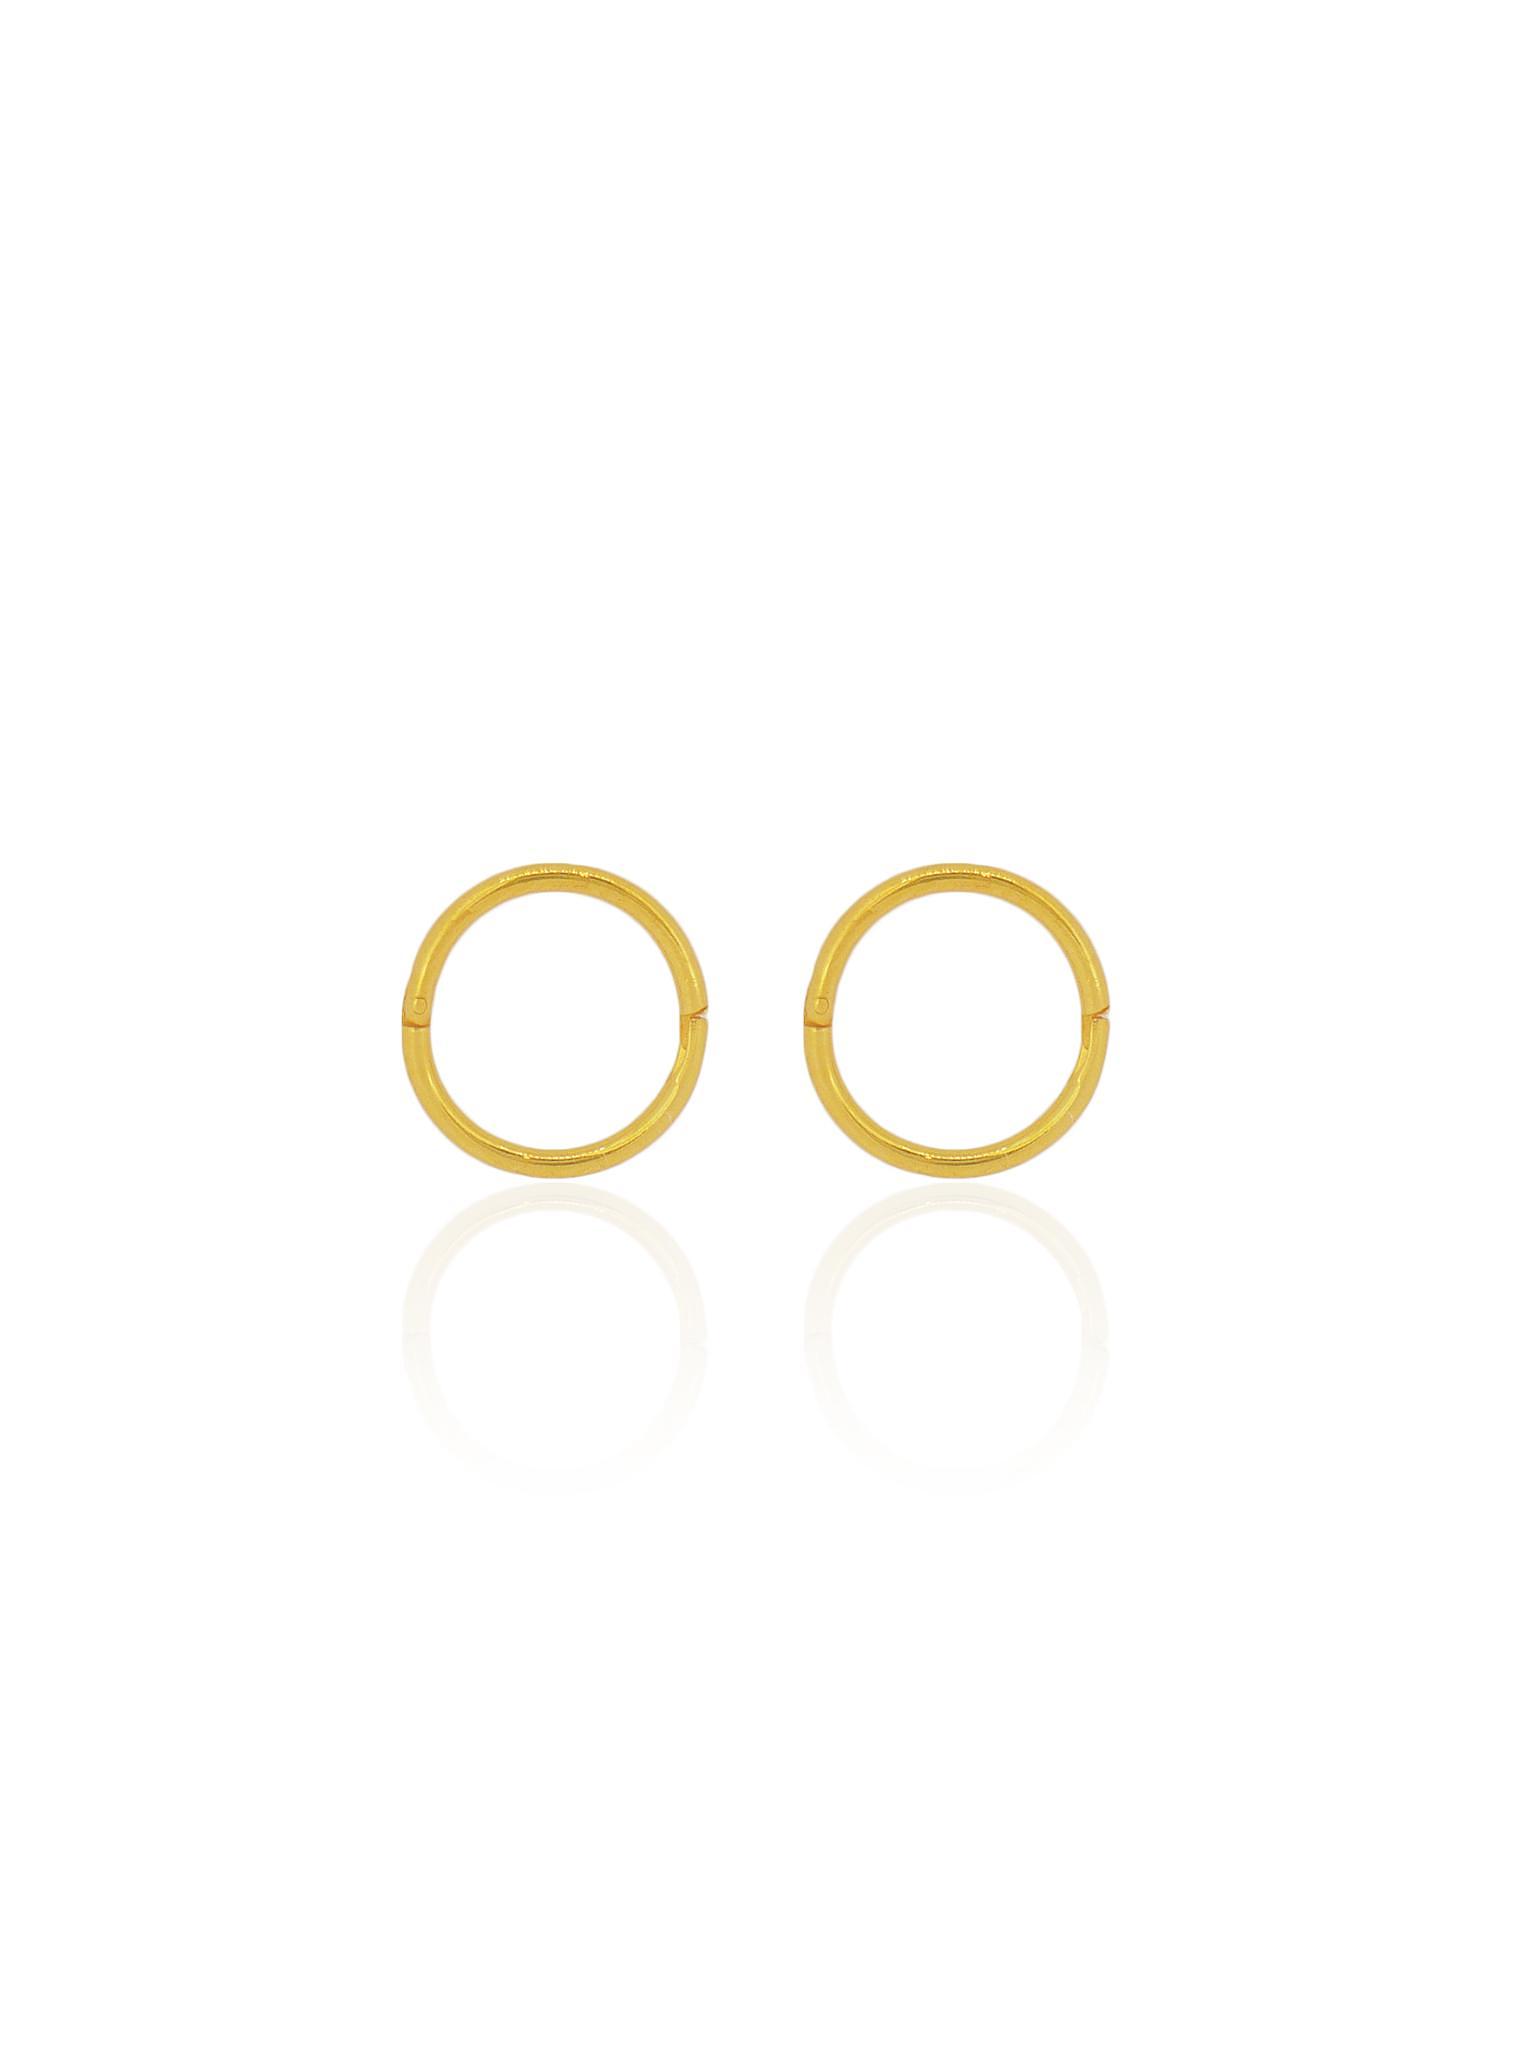 18ct White/Yellow Gold Diamond Children's Earrings 0.14ct Child friendly |  eBay